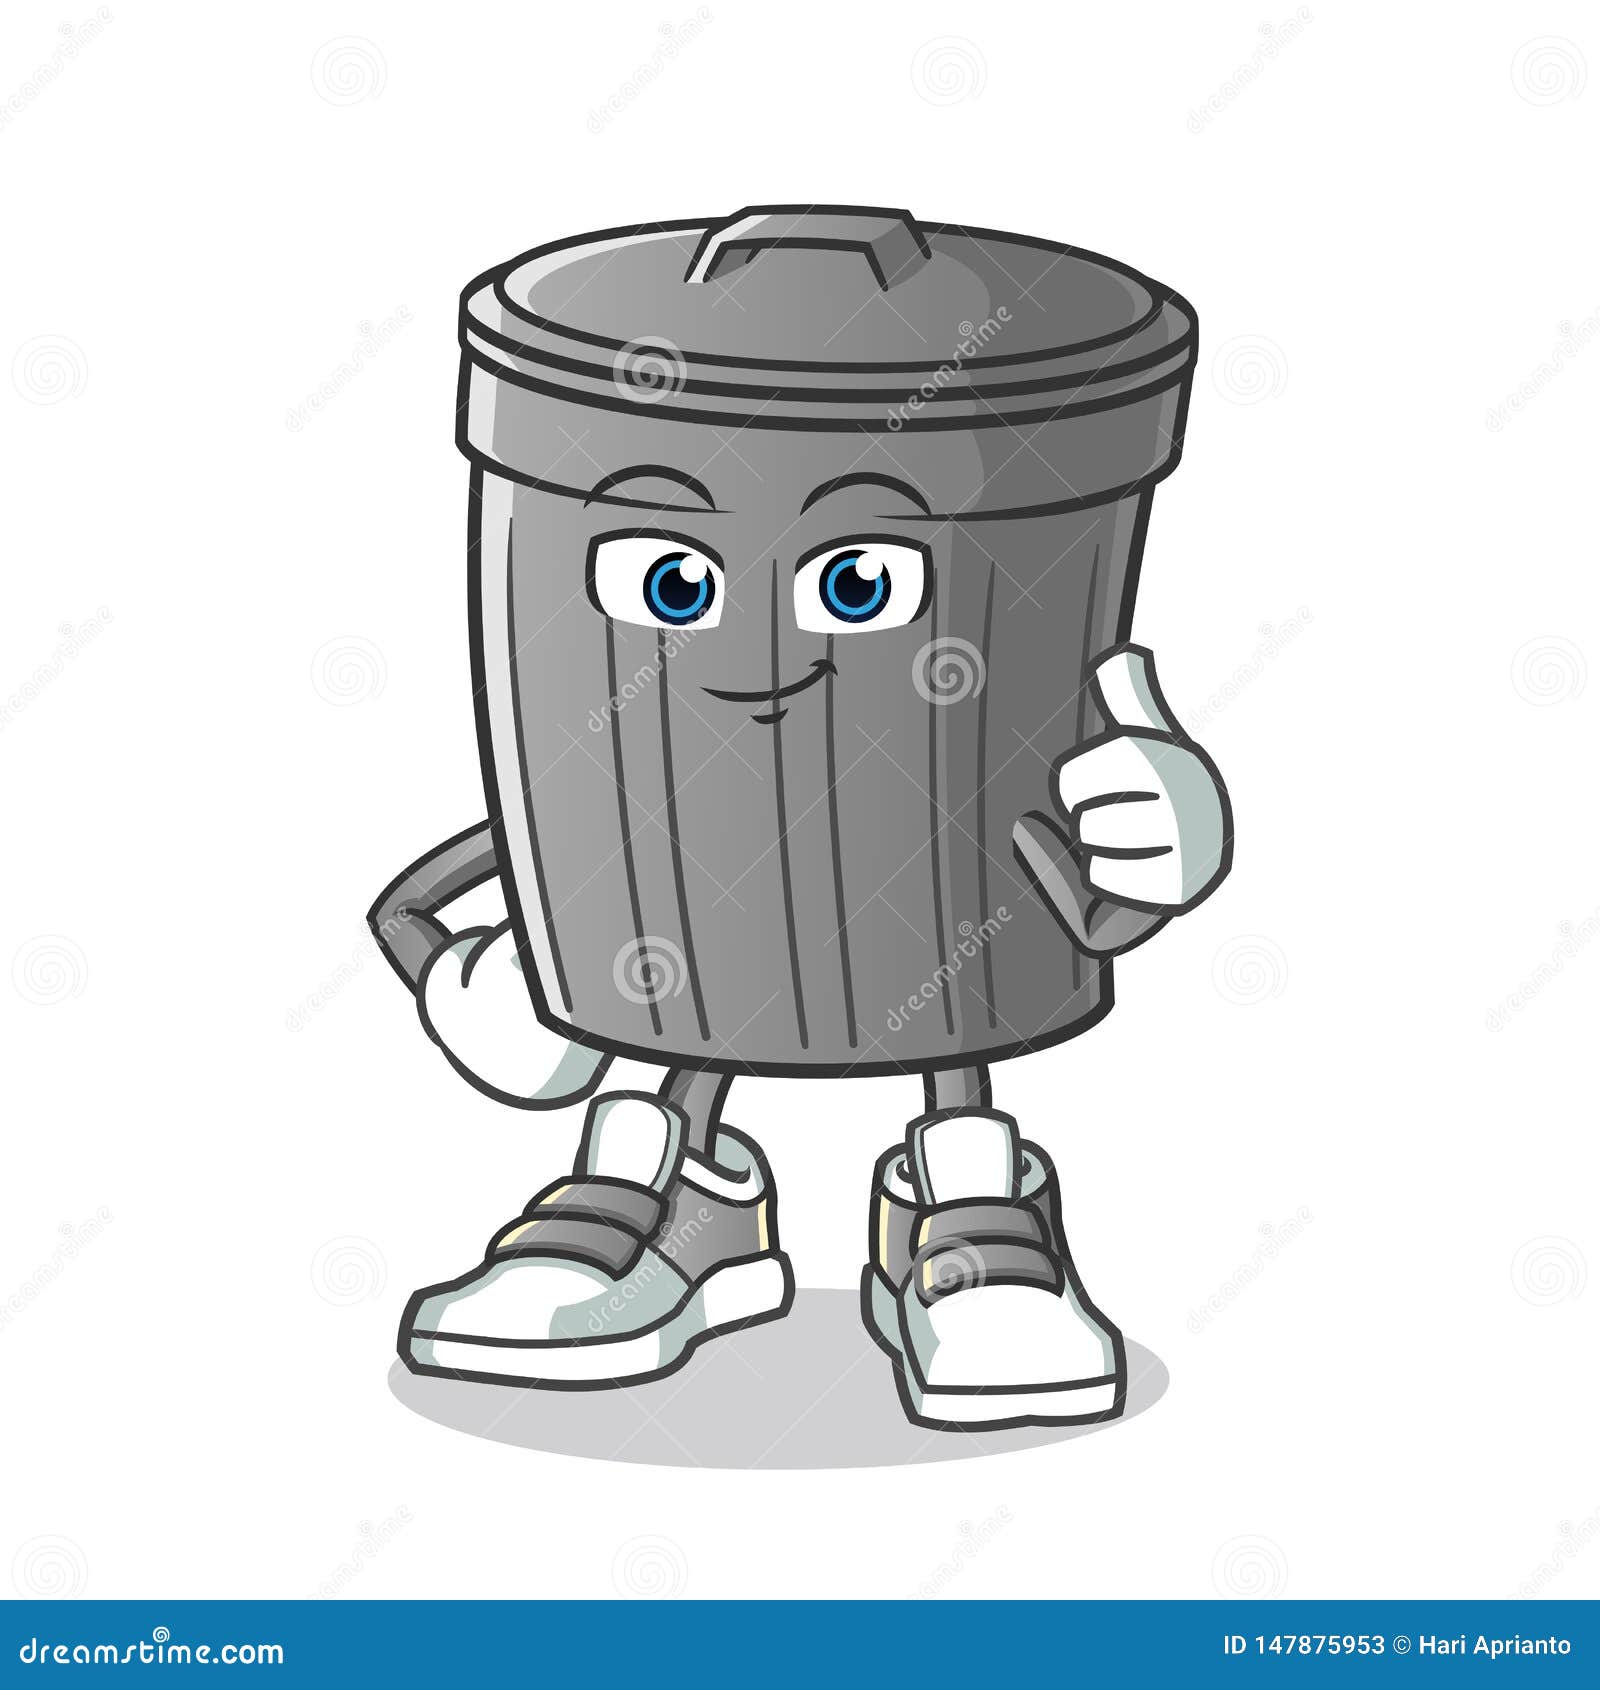 Trash Can Thumbs Up Mascot Vector Cartoon Illustration Stock Vector -  Illustration of face, design: 147875953